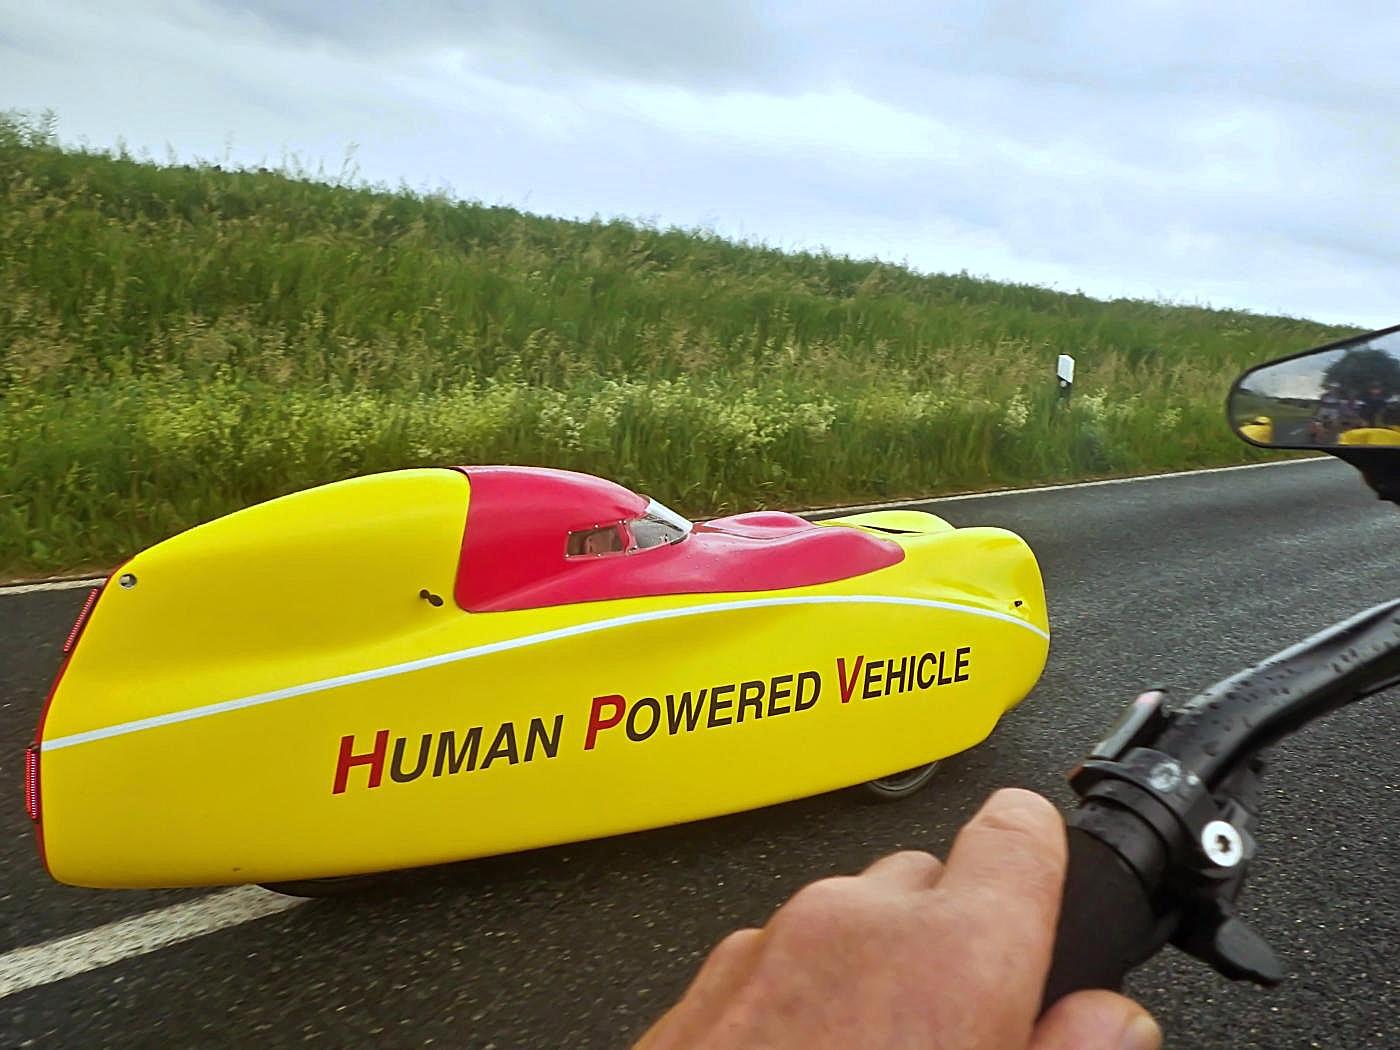 Human Powered Vehicle en route